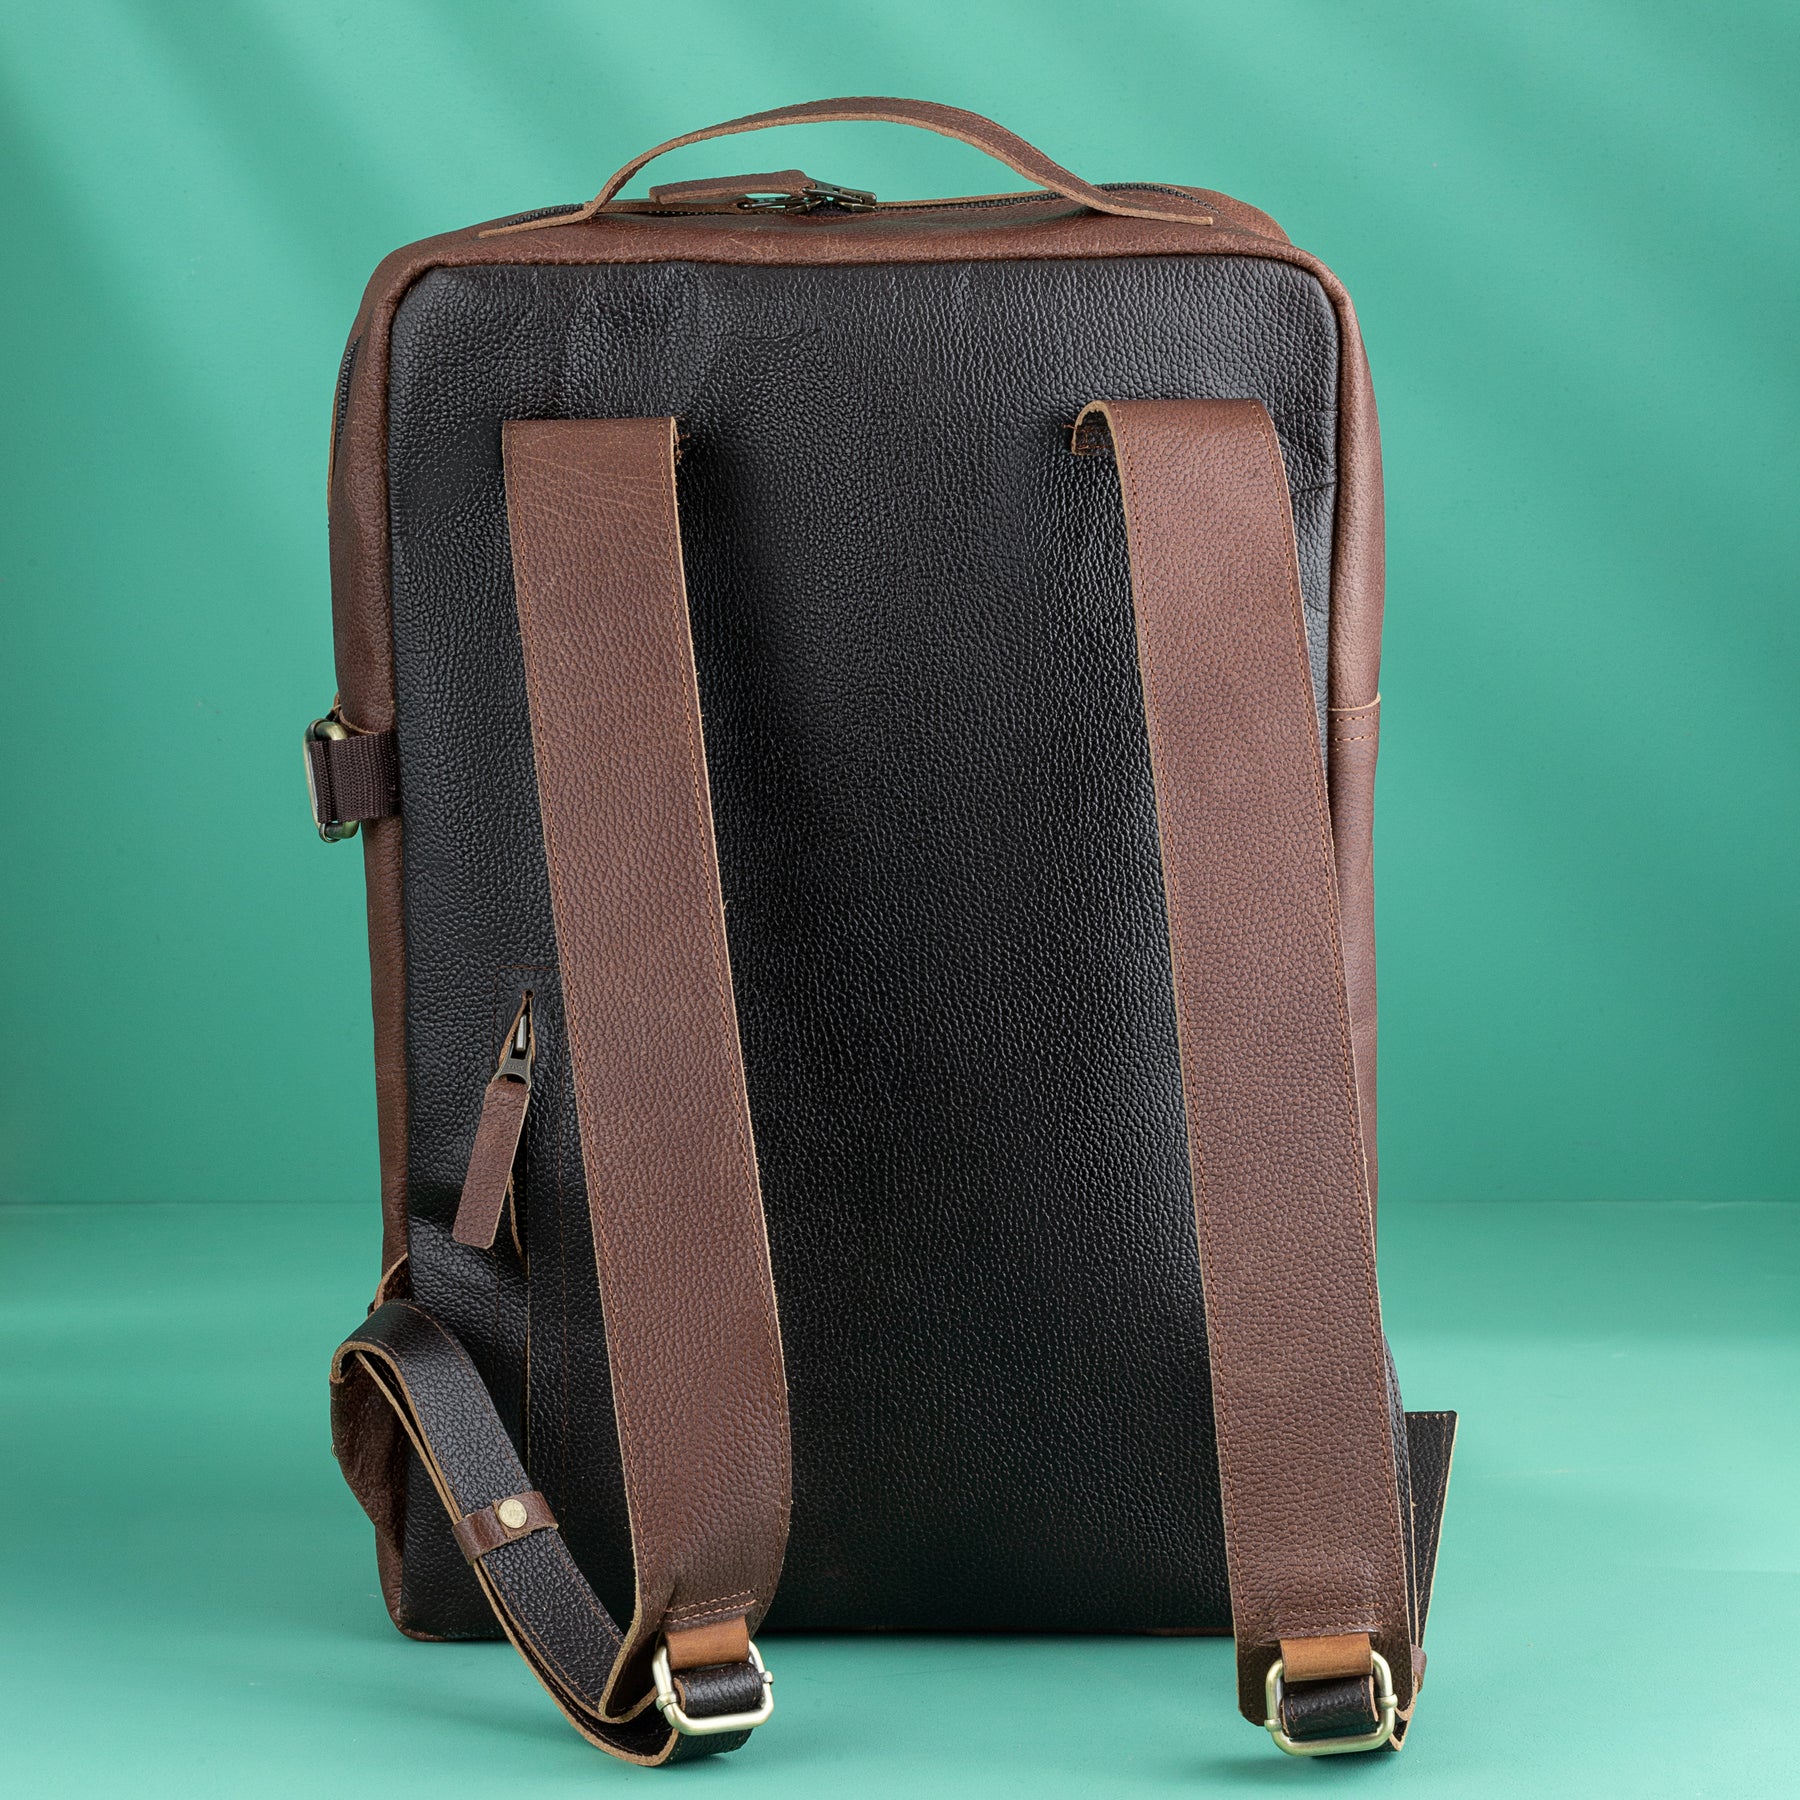 33rd Degree Scottish Rite Backpack - Genuine Brown Leather - Bricks Masons